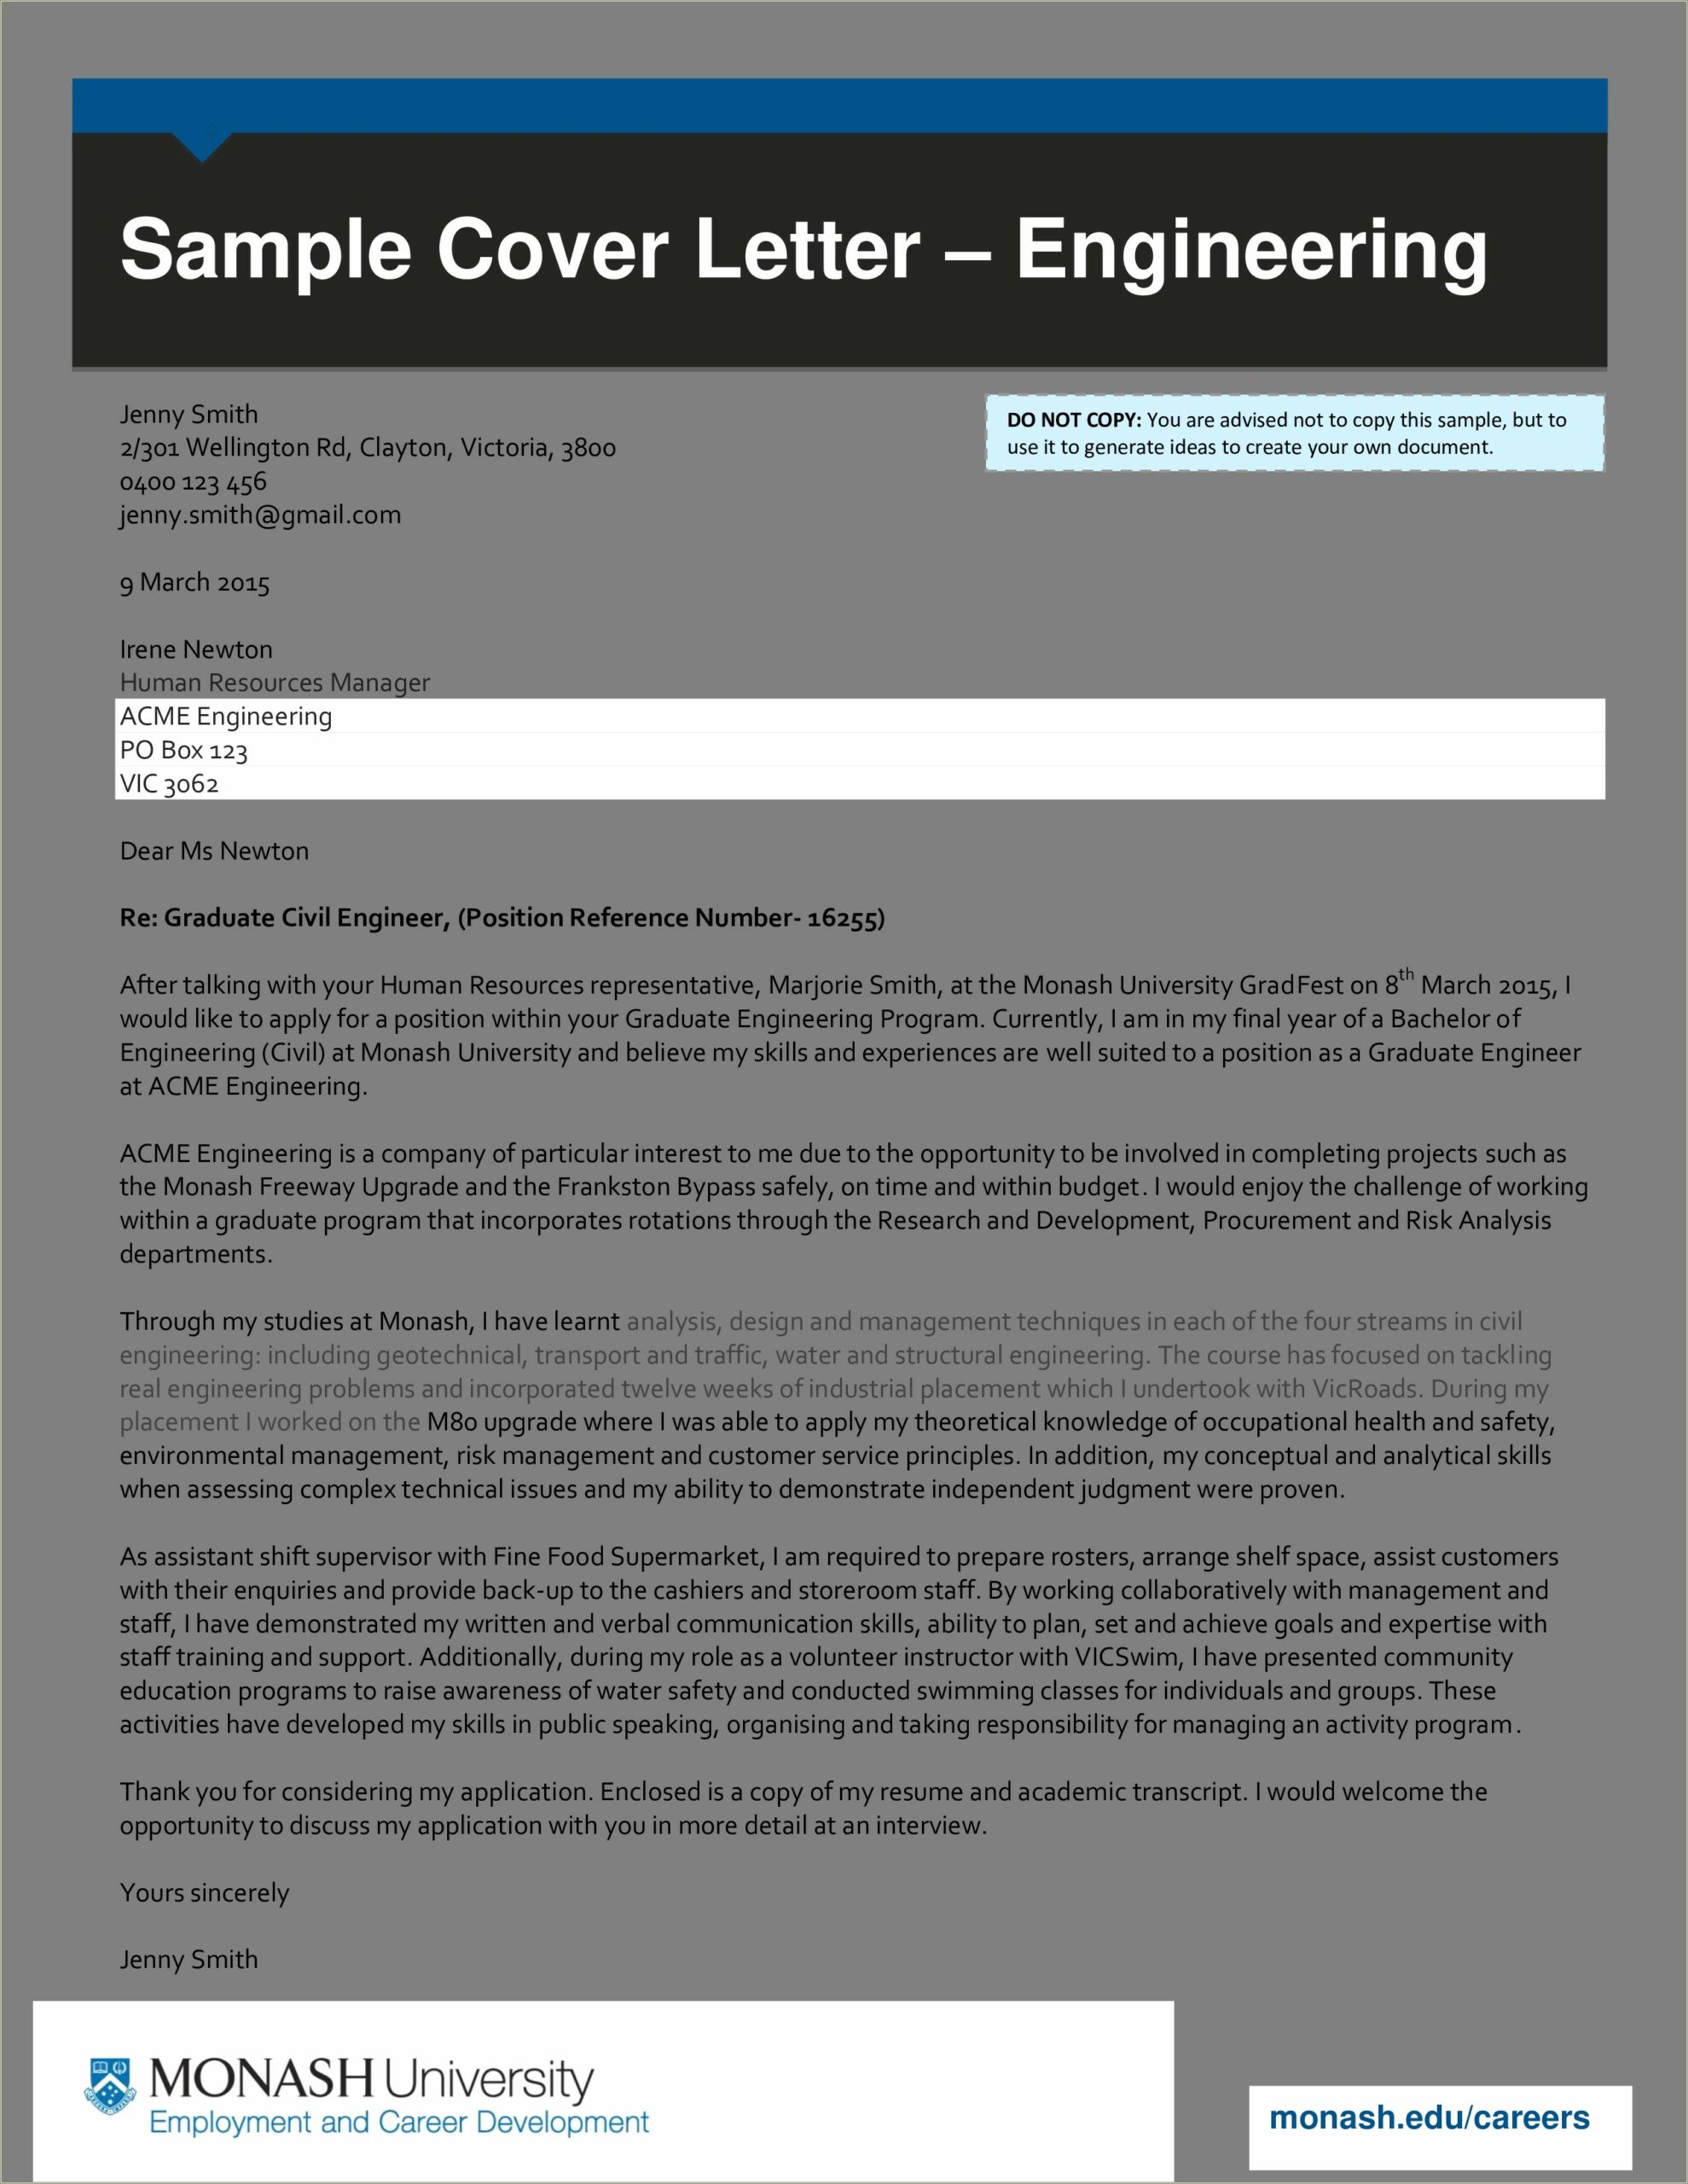 Cover Letter For Resume Graduate School